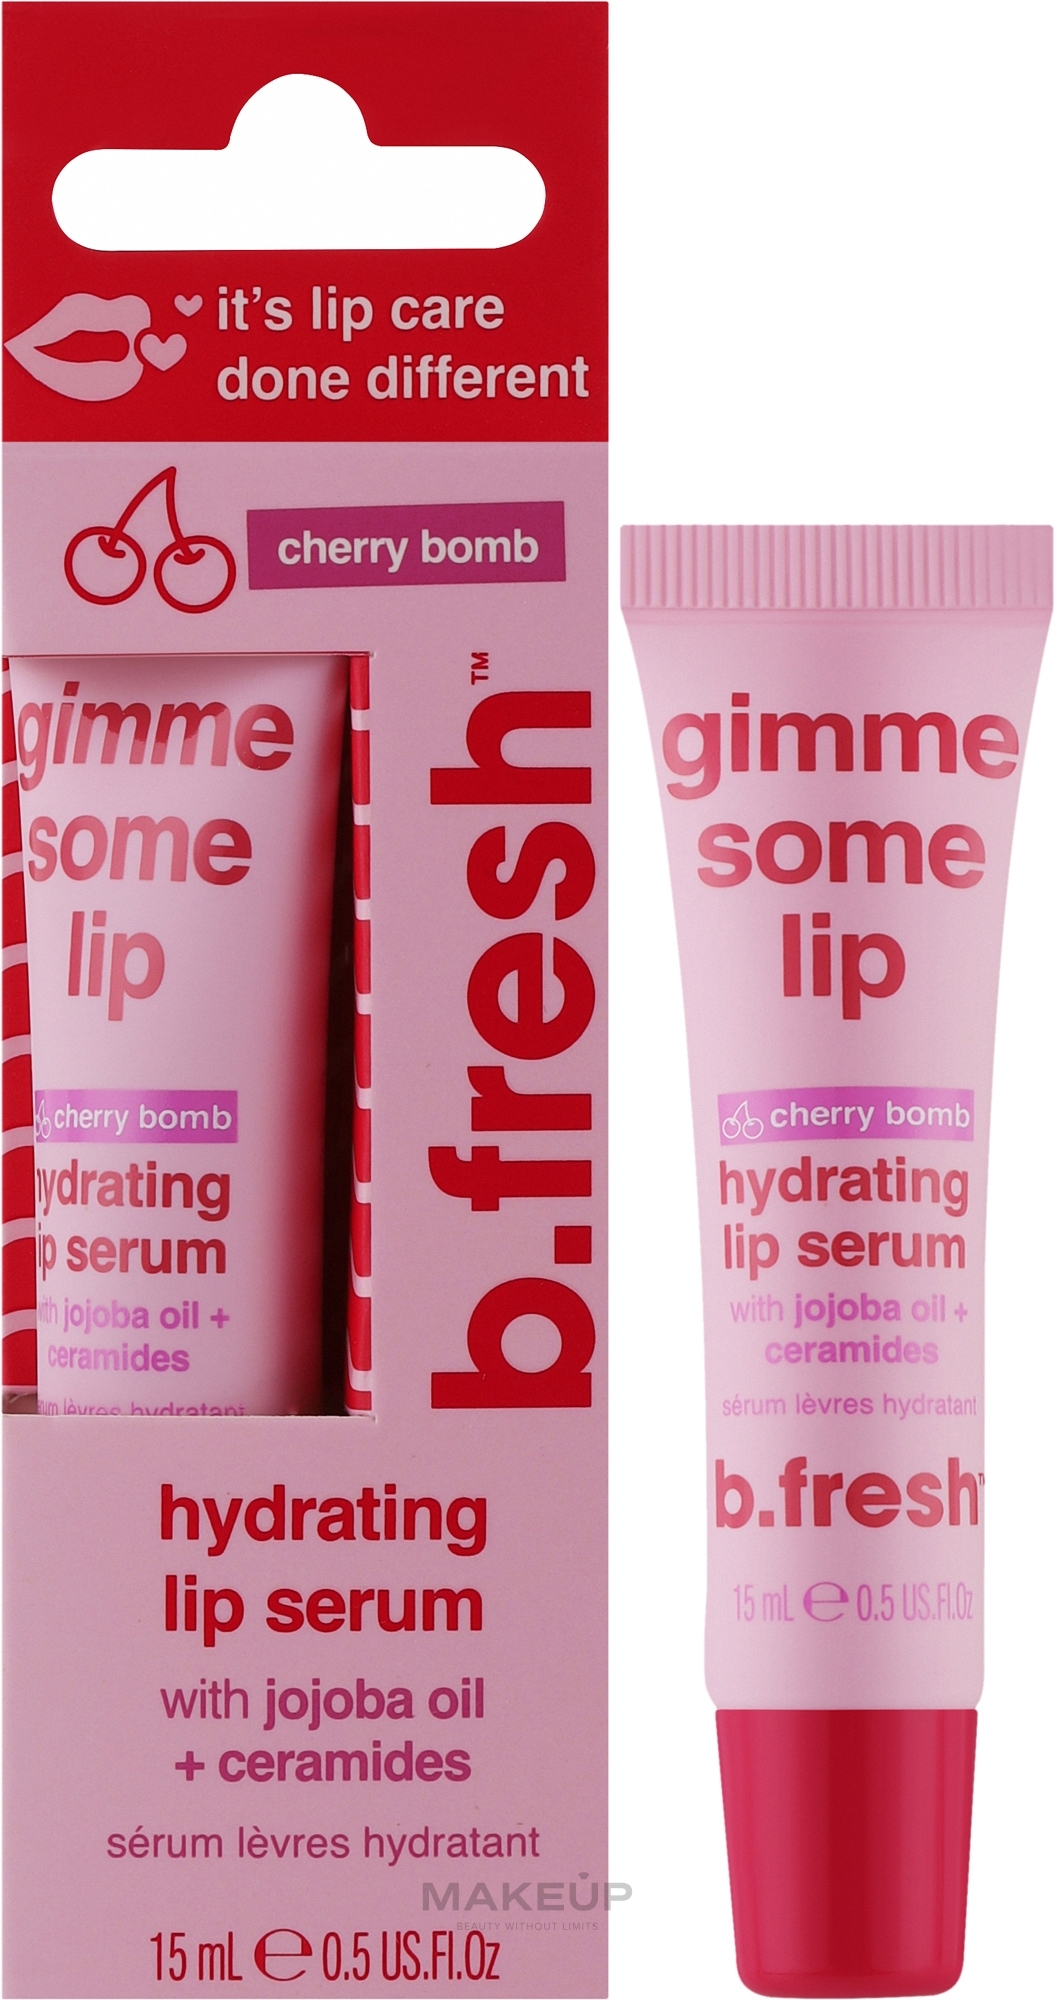 Сыворотка для губ - B.fresh Gimme Some Lip Lip Serum — фото 15ml